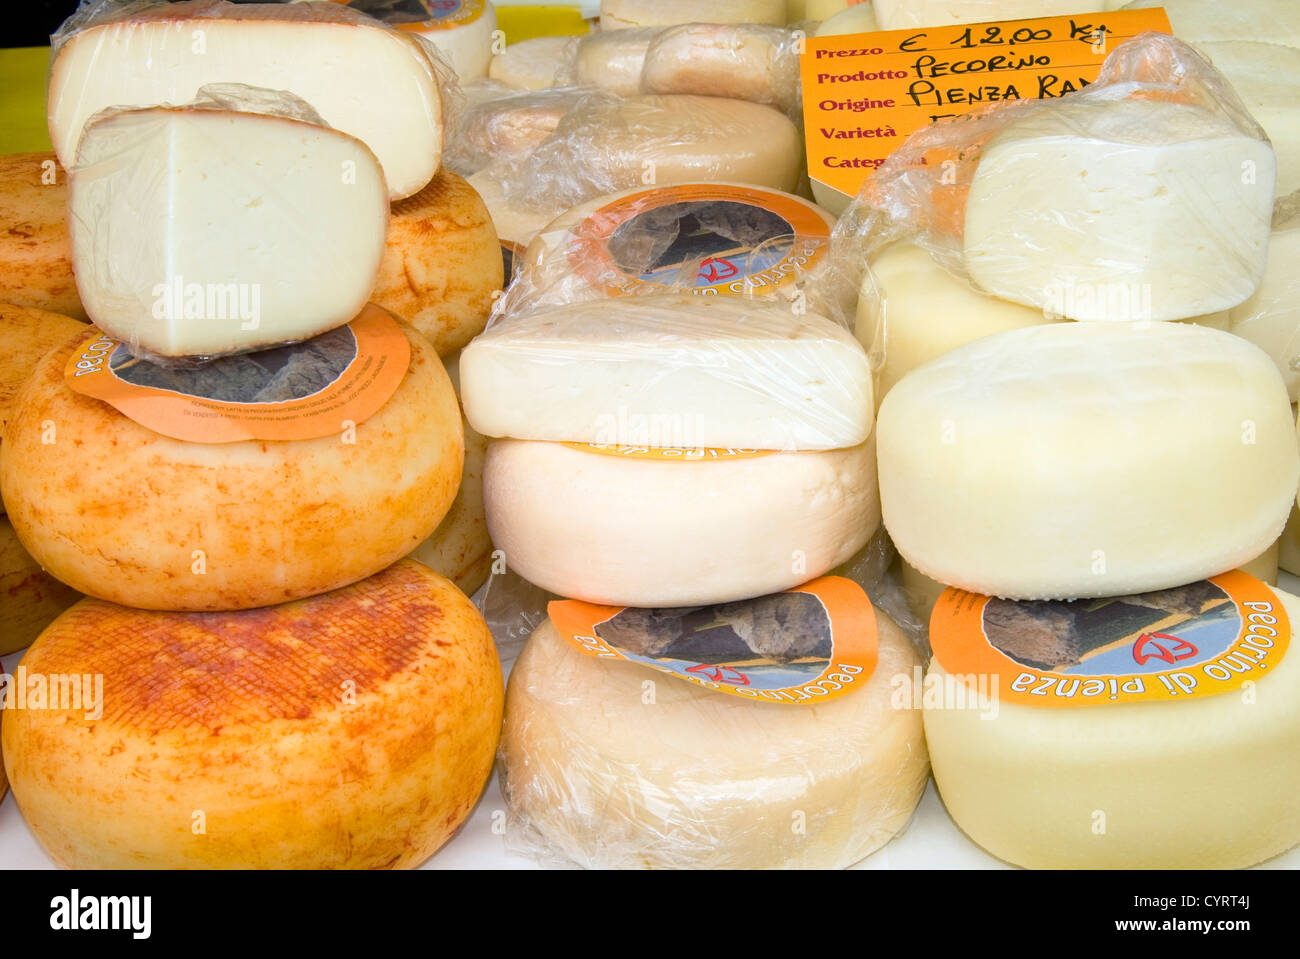 Pecorino cheese, Firenze, Tuscany, Italy Stock Photo